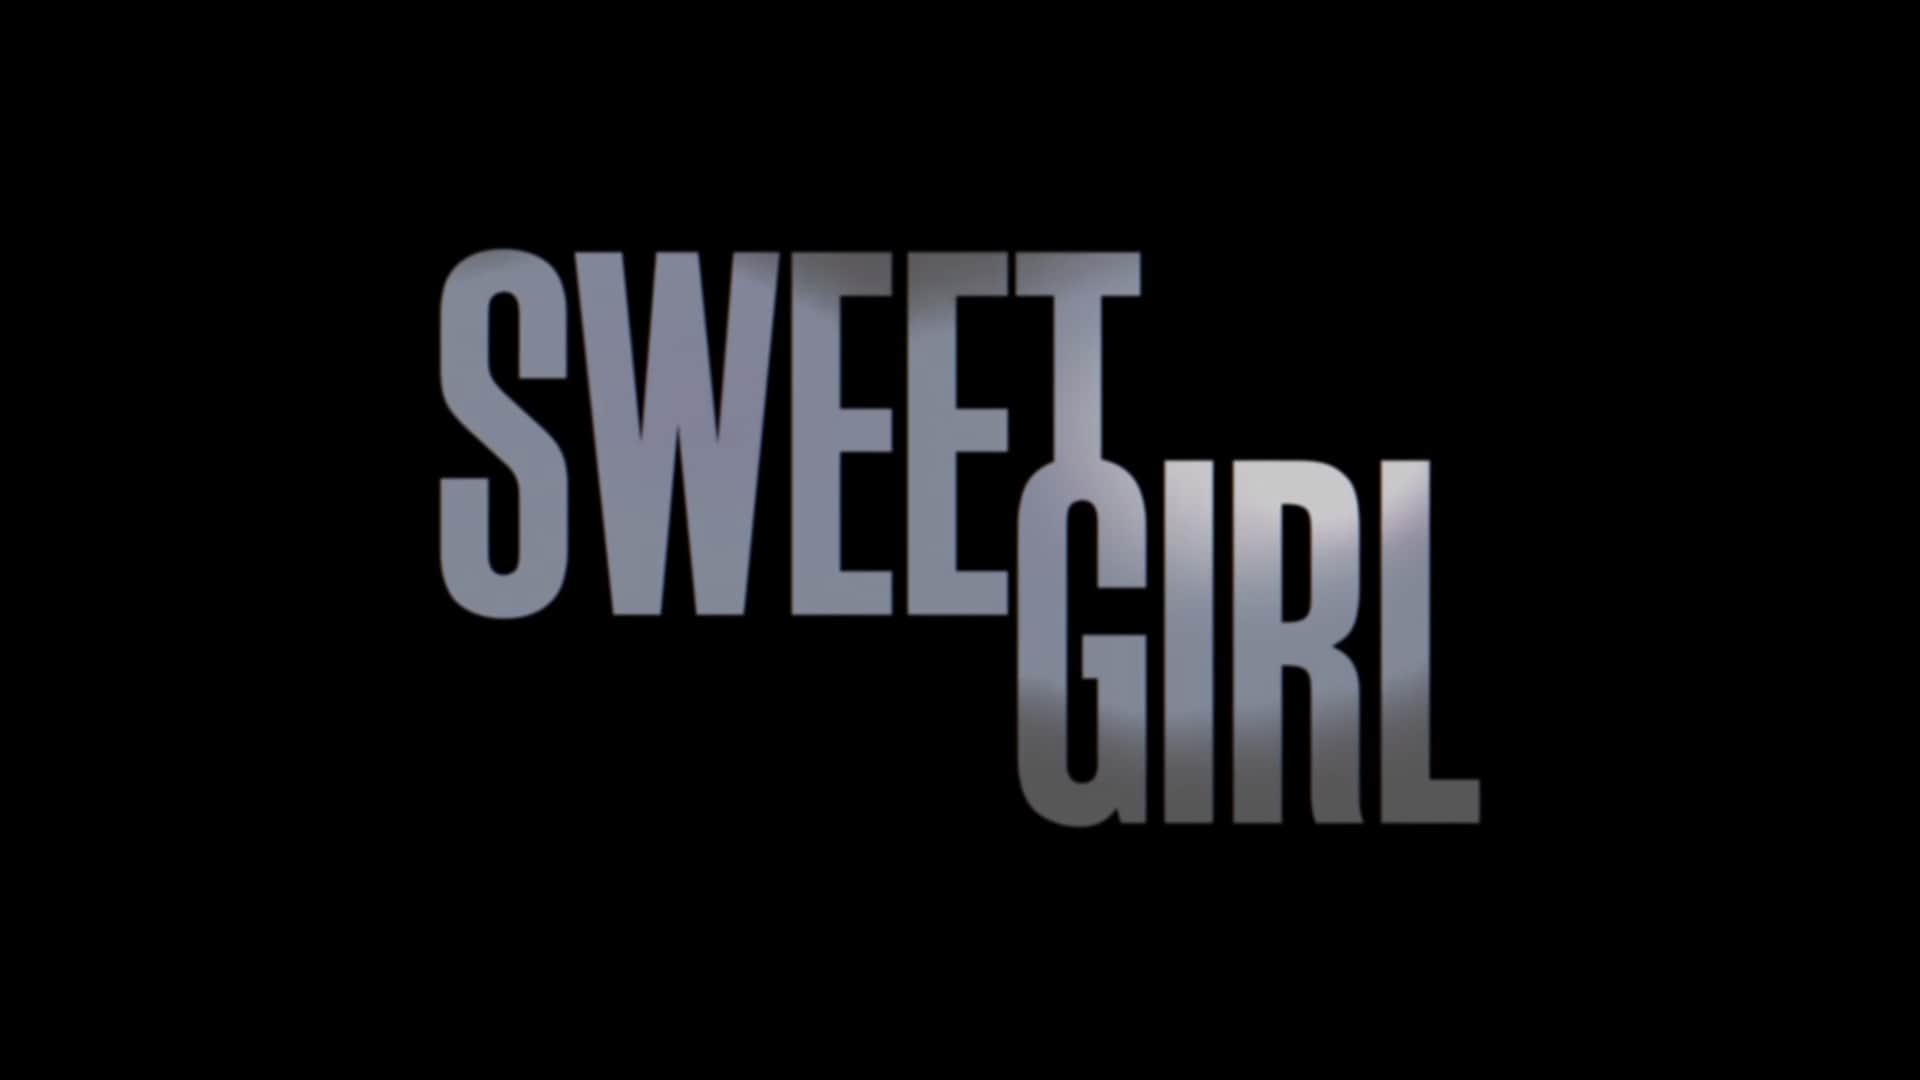 Netflix Sweet Girl Trailer, Coming to Netflix in August 2021